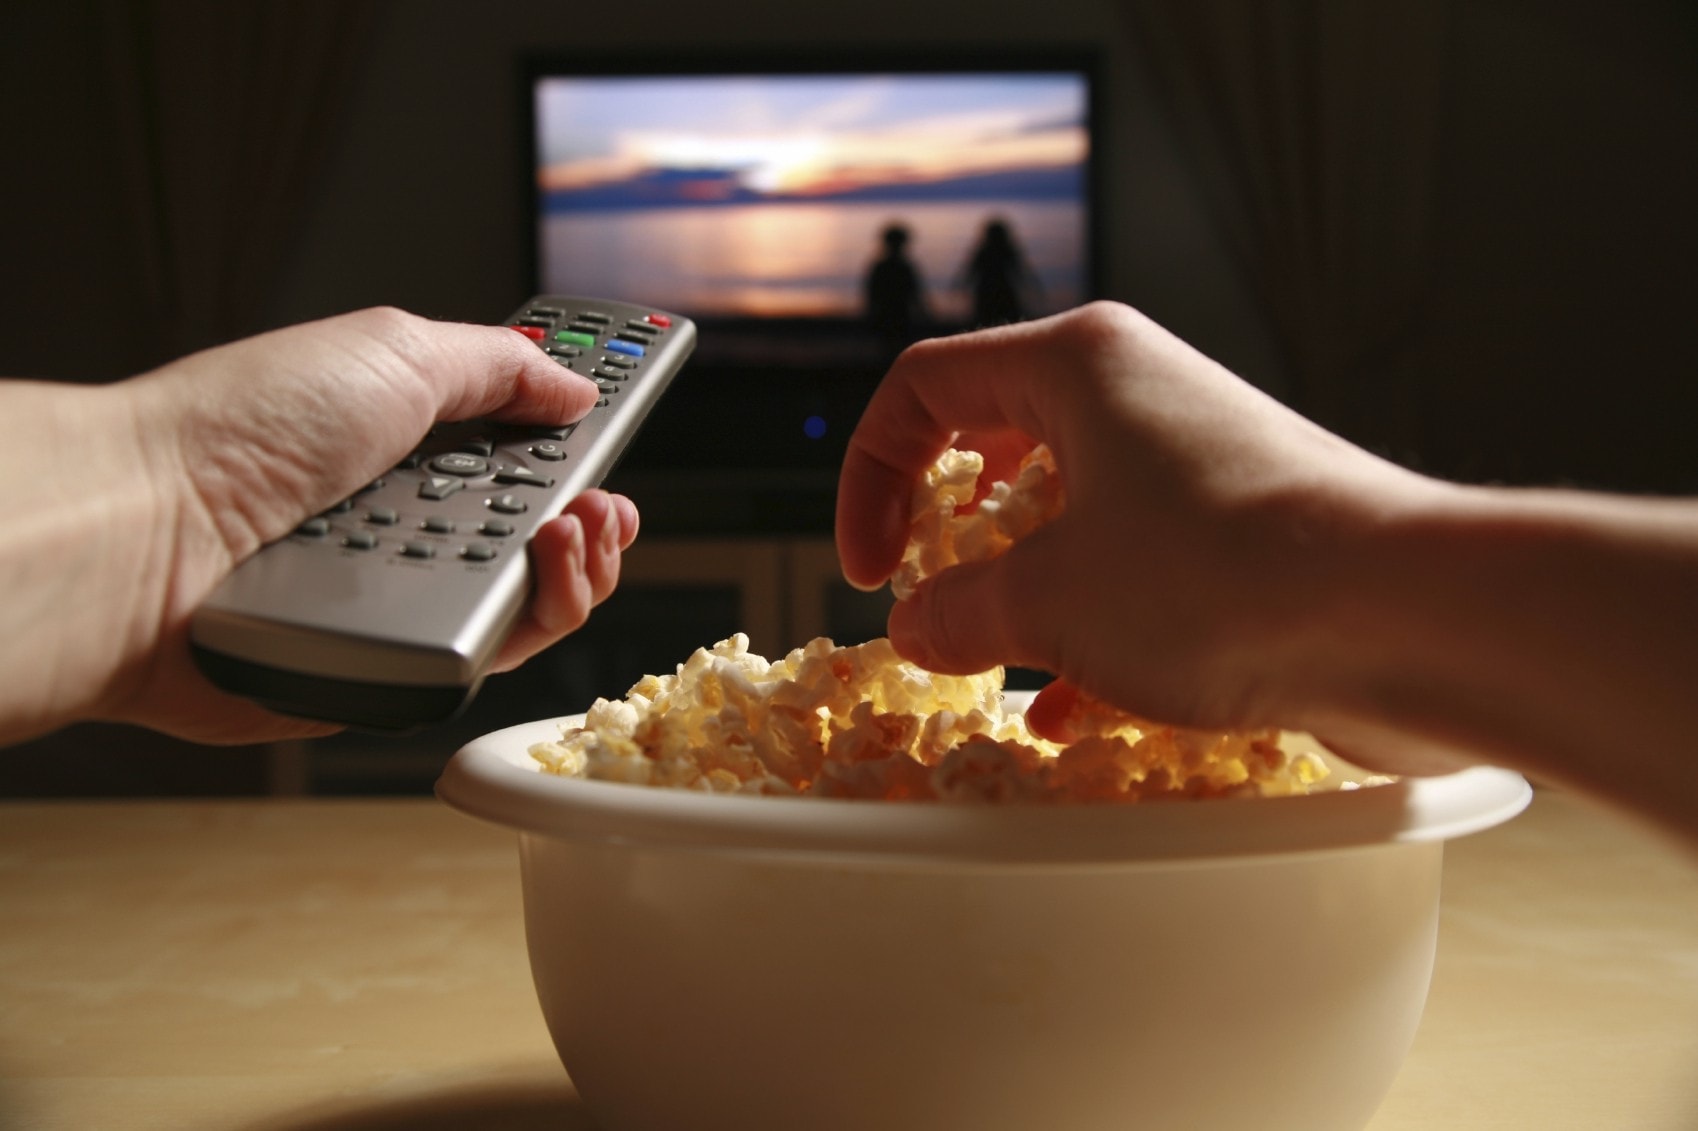 eating-popcorn-while-watching-movie